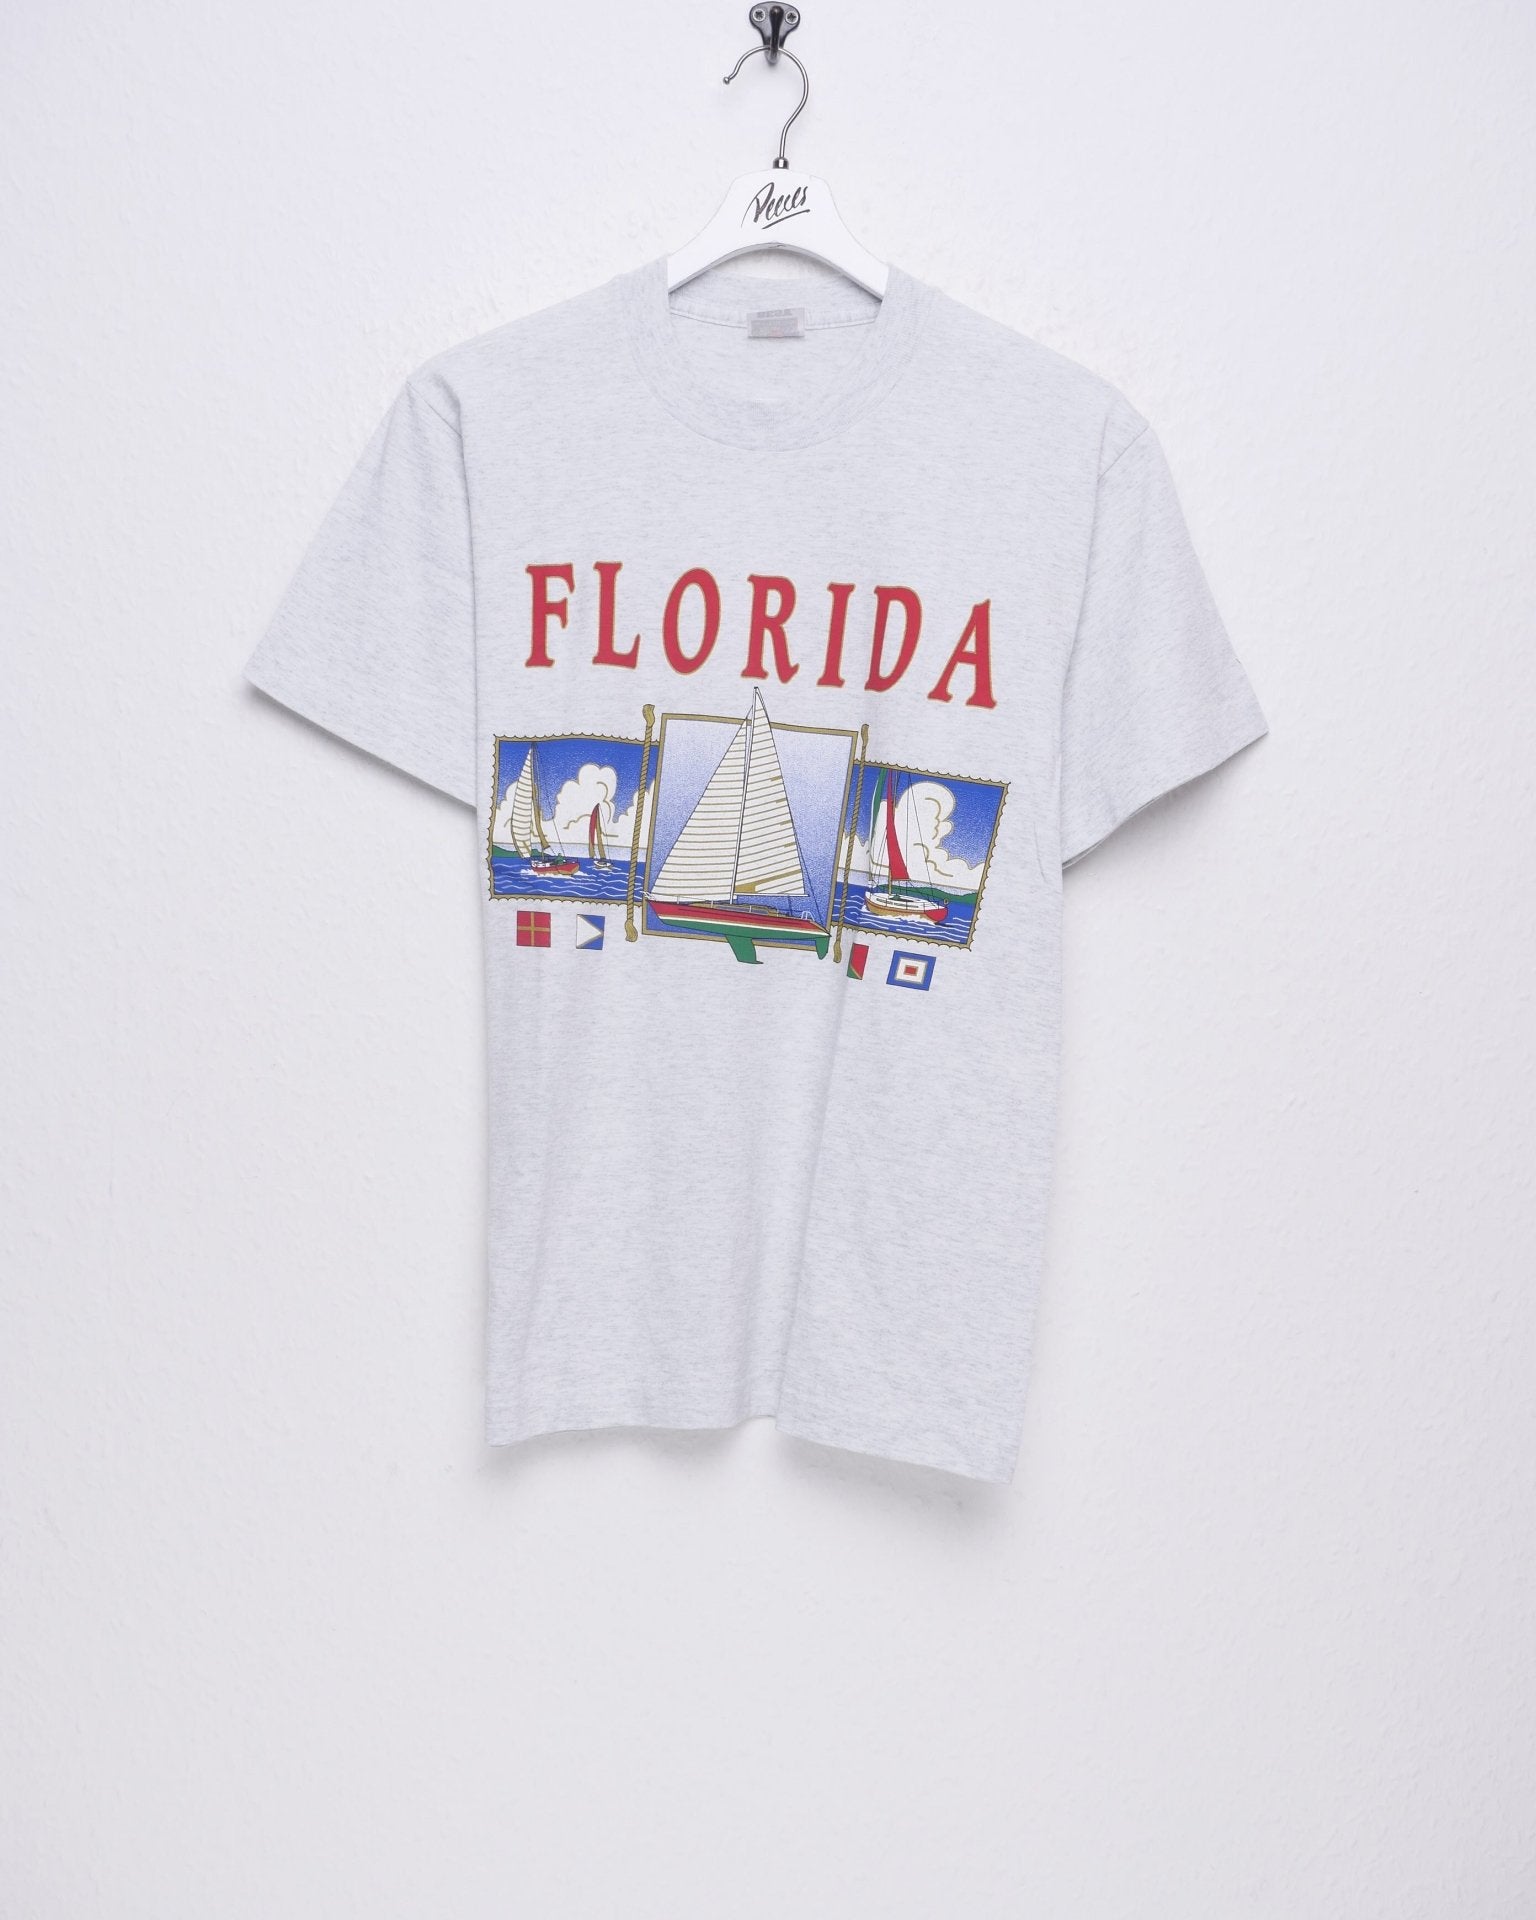 Florida printed Graphic Vintage Shirt - Peeces